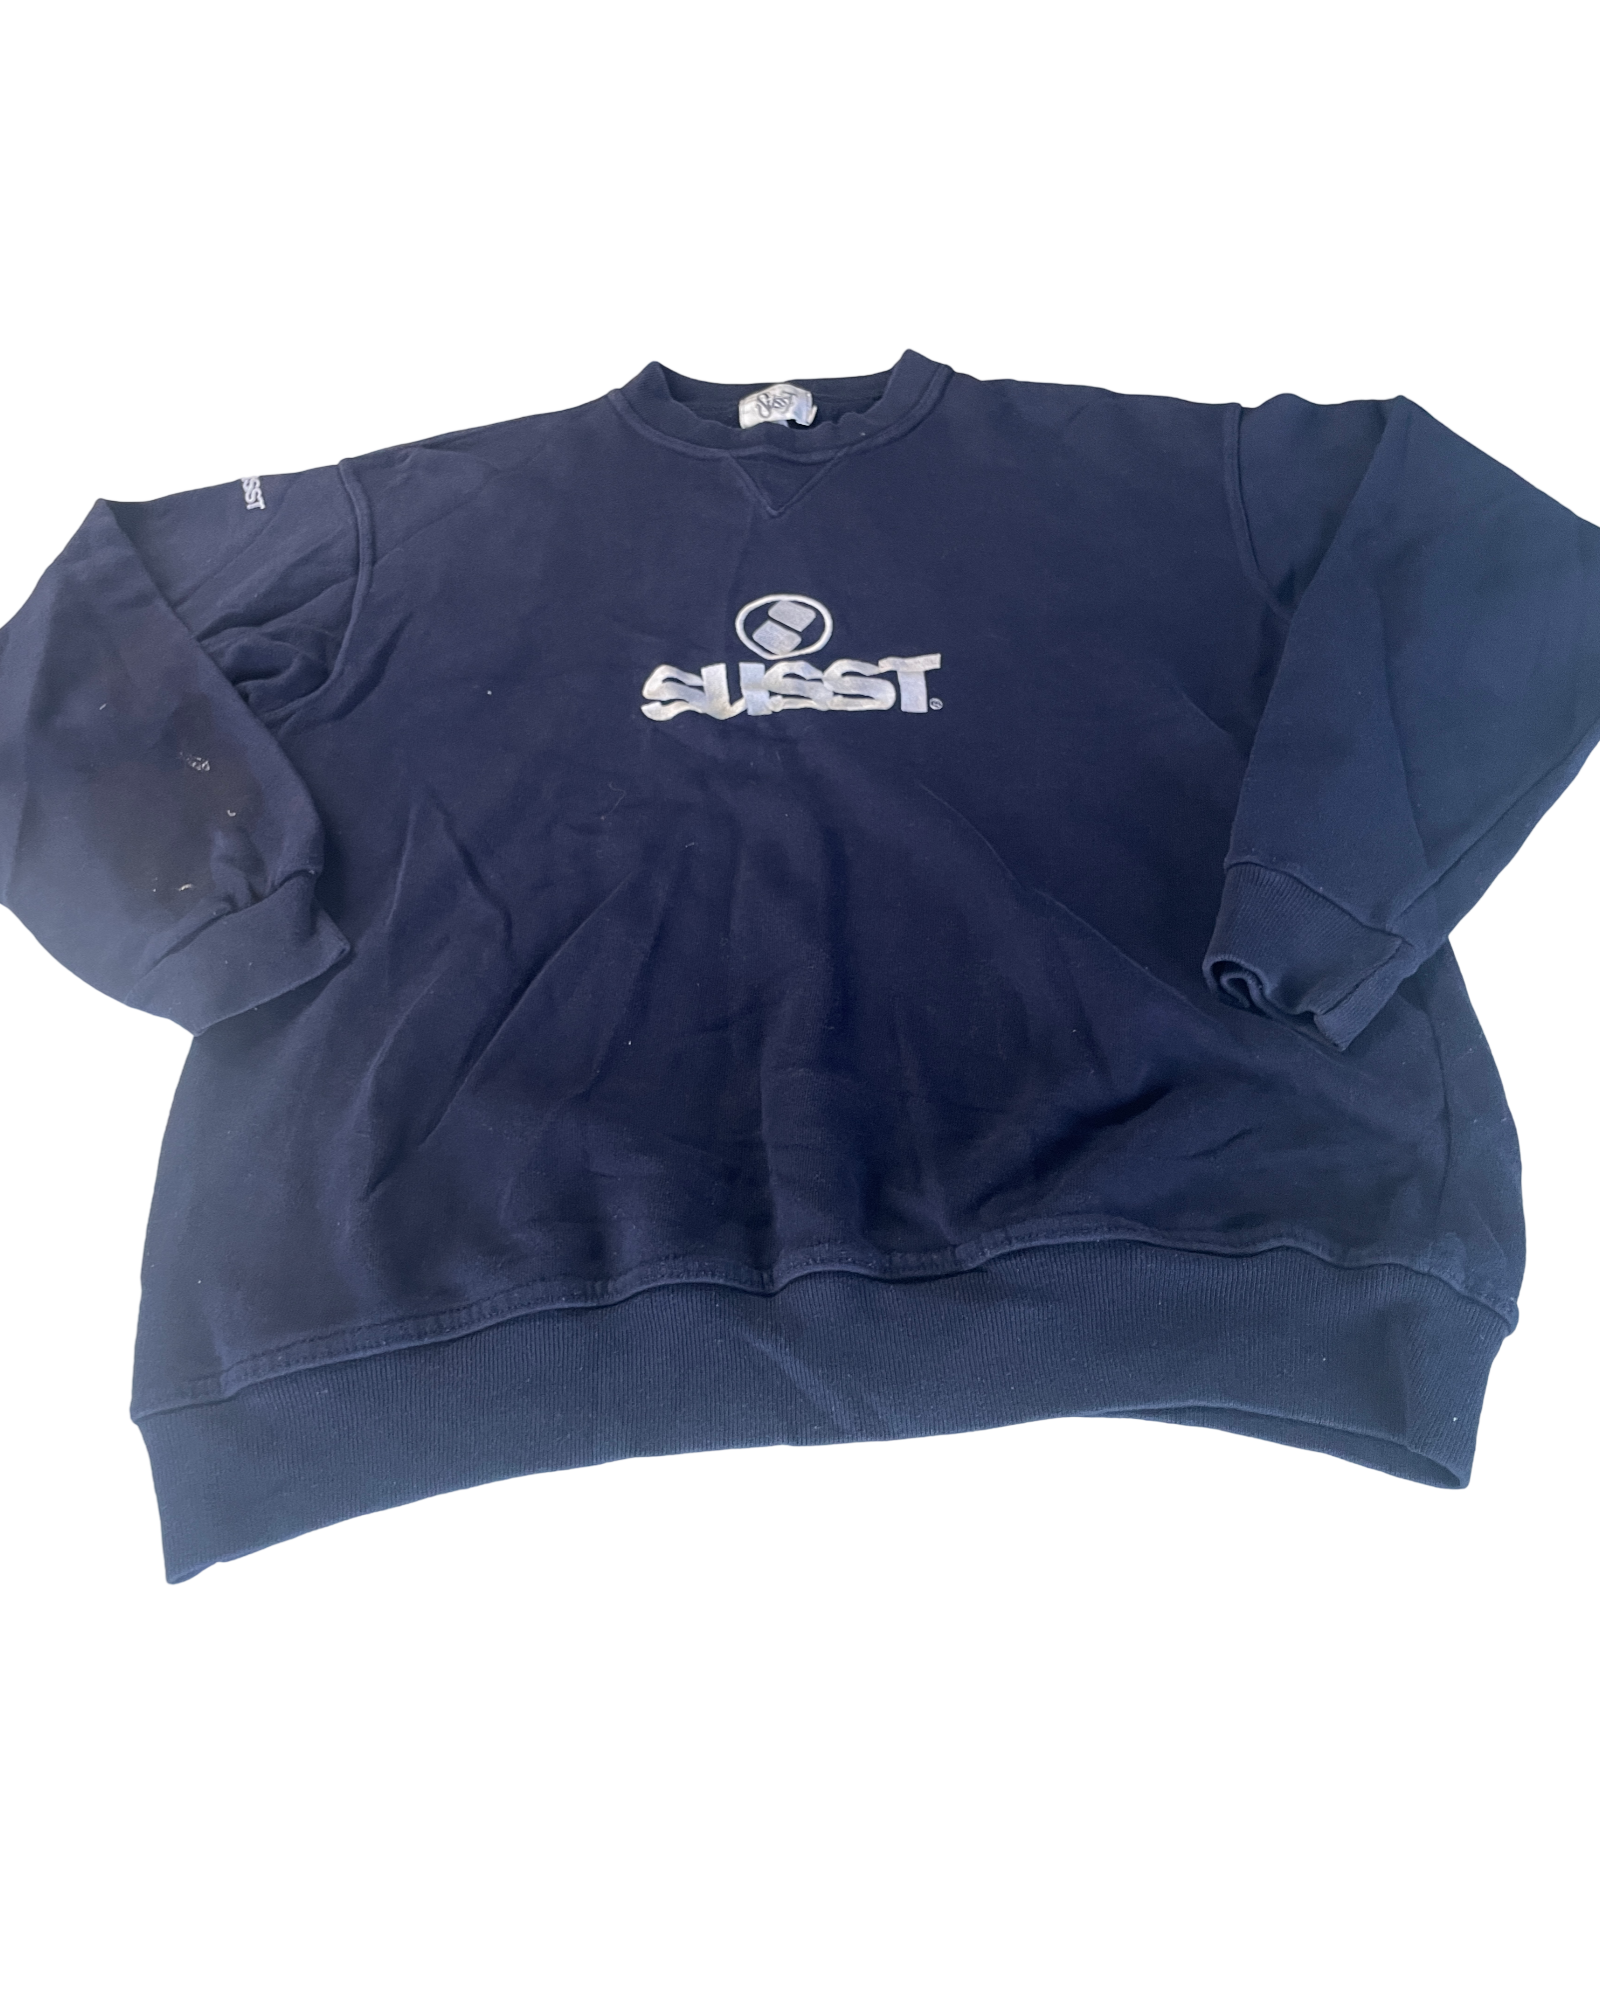 Vintage Blue Susst Big Logo Sweatshirt|SKU 5005